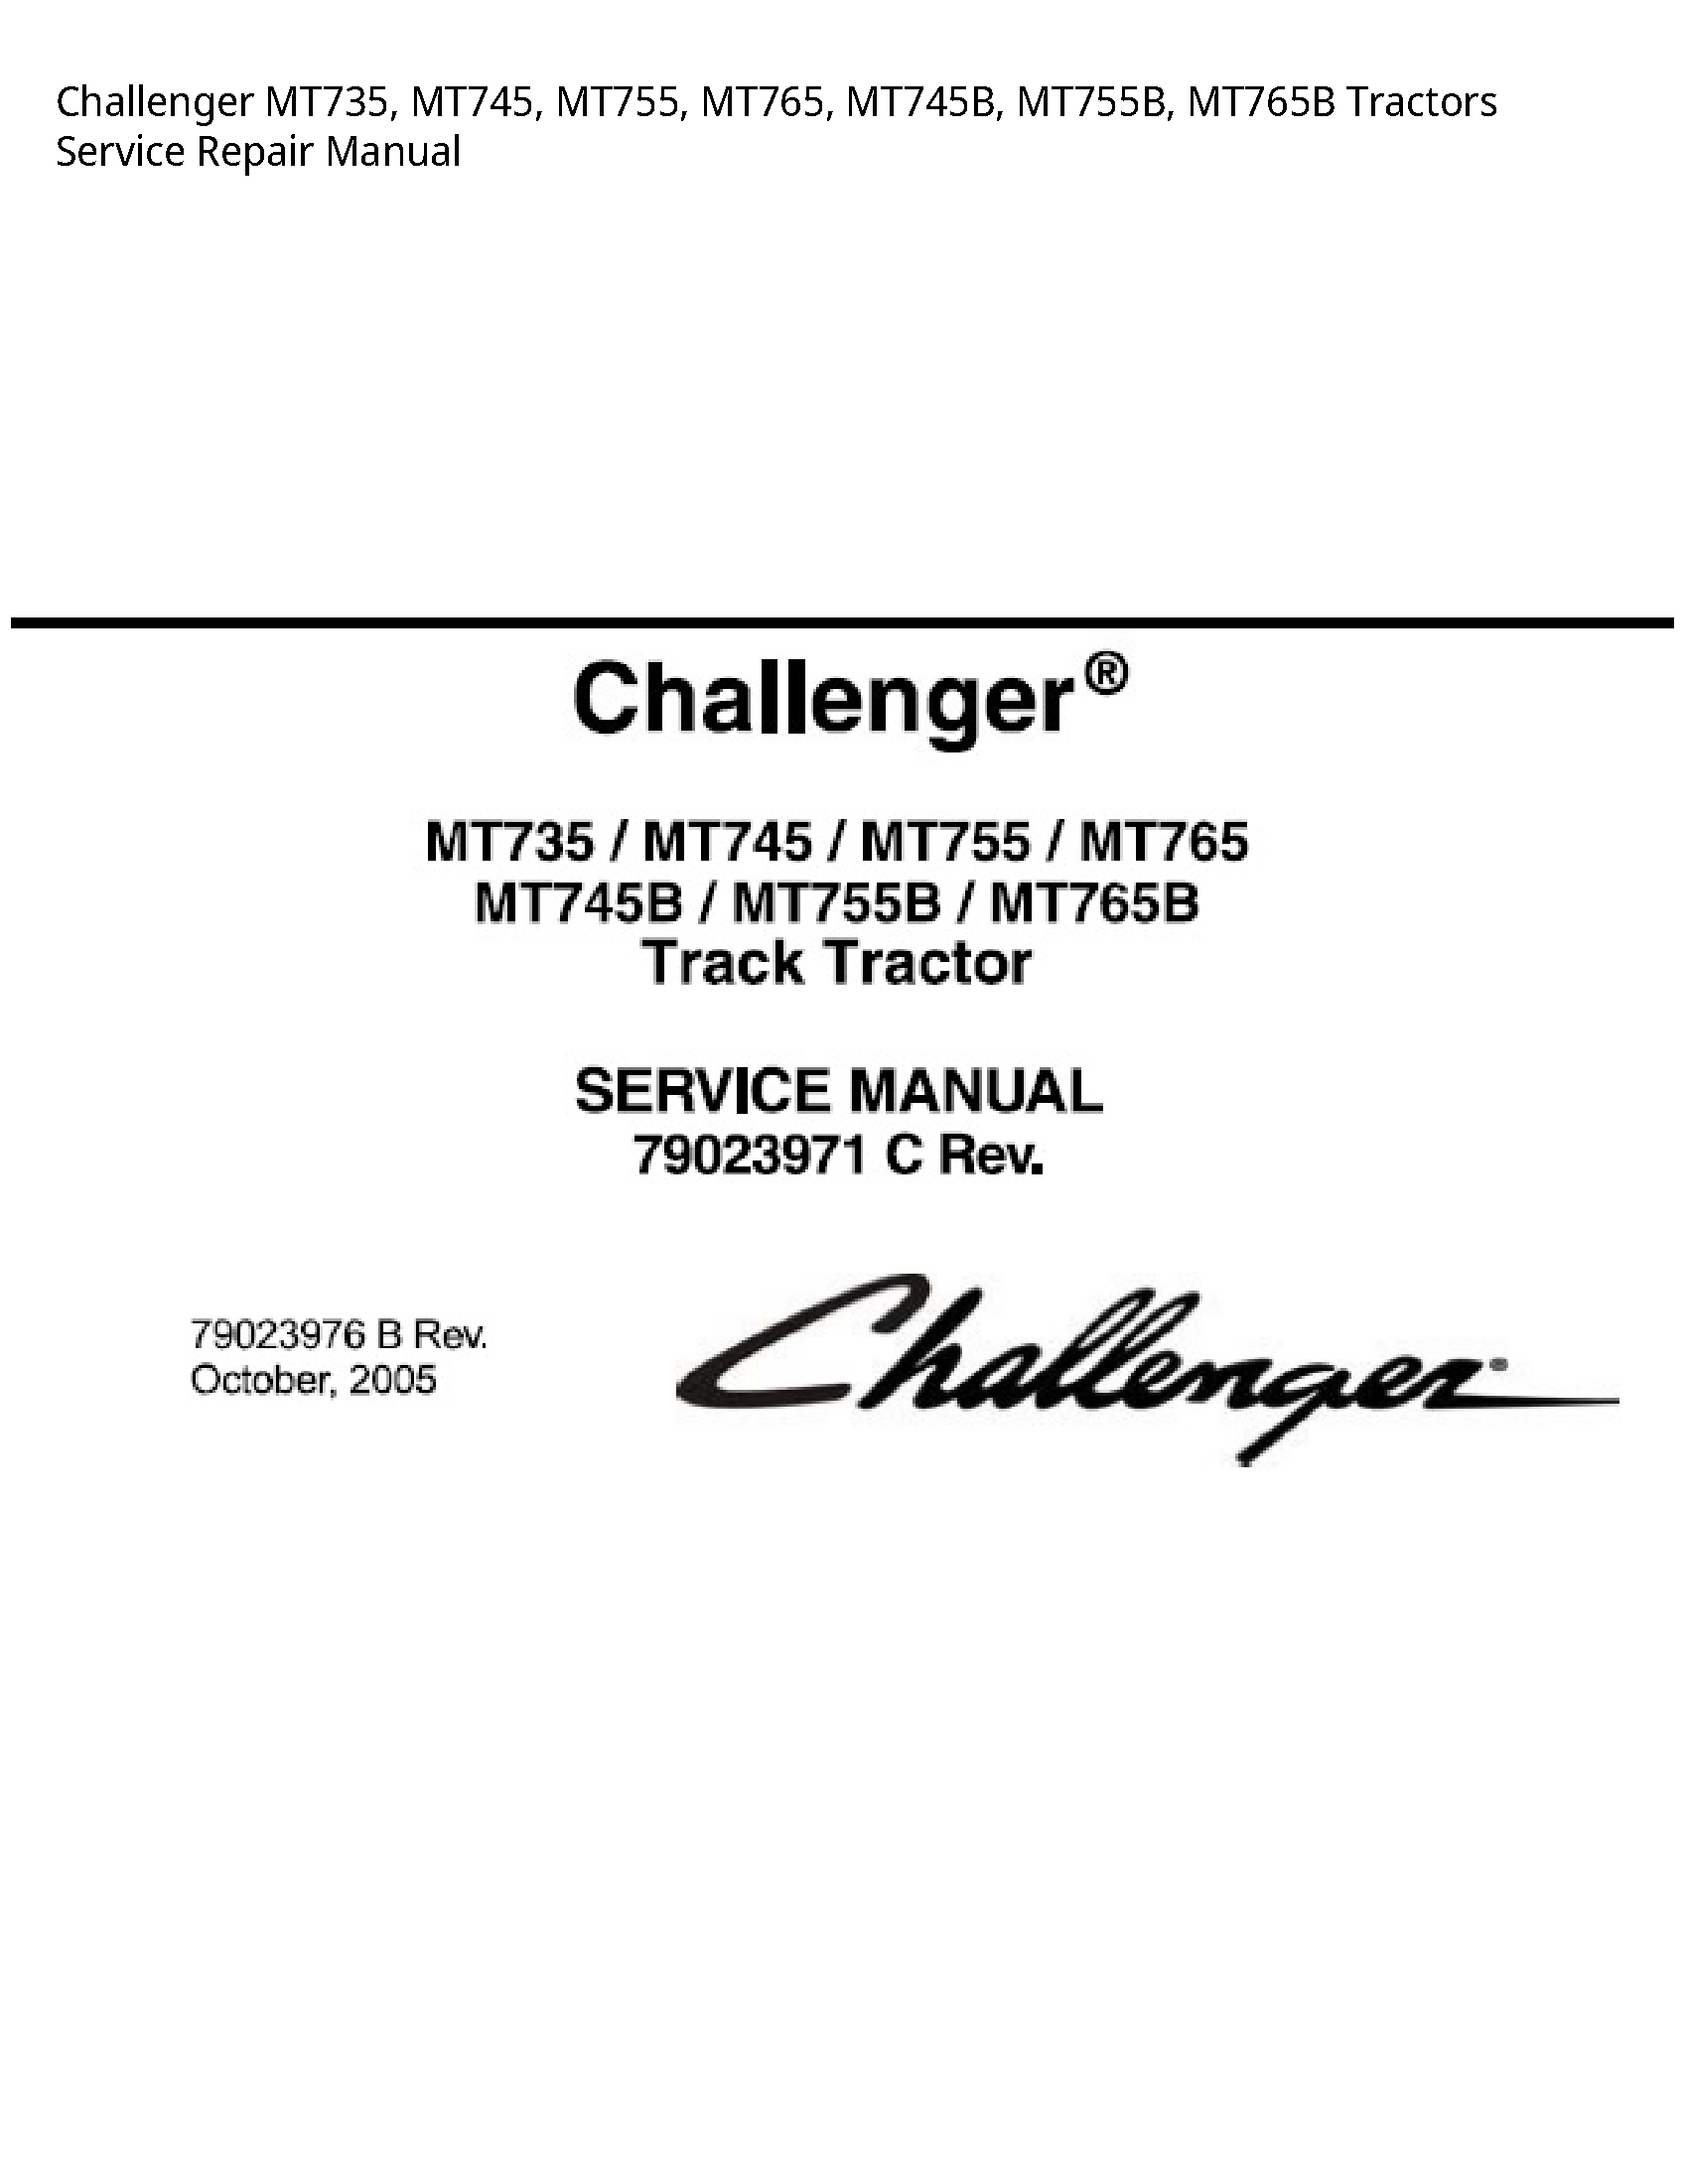 Challenger MT735 Tractors manual